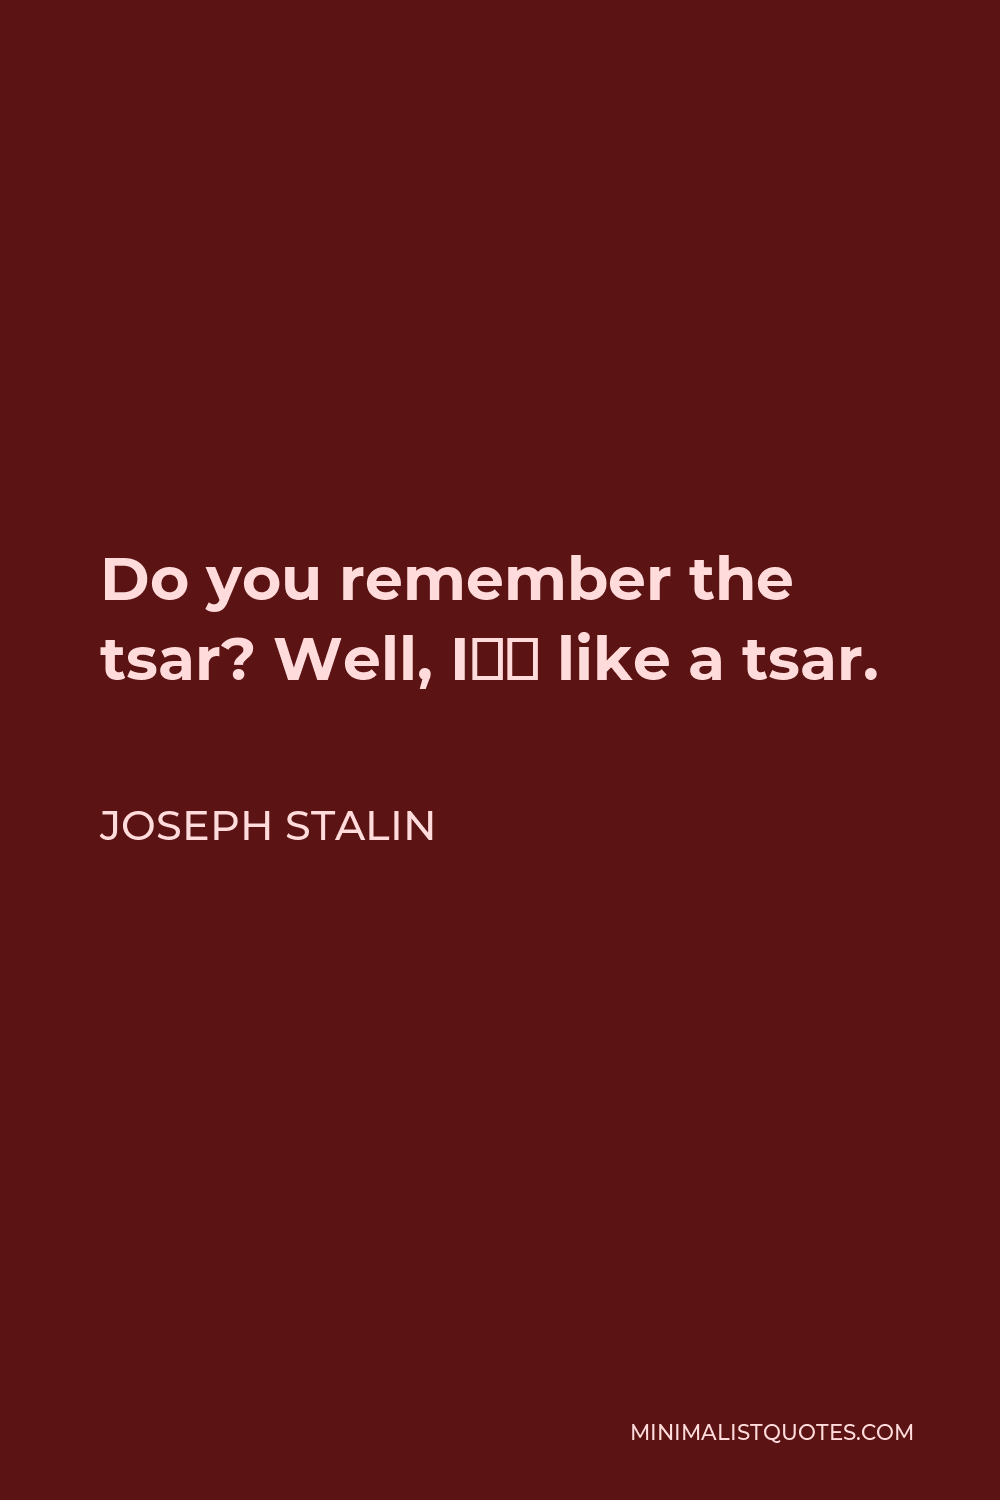 Joseph Stalin Quote - Do you remember the tsar? Well, I‘m like a tsar.